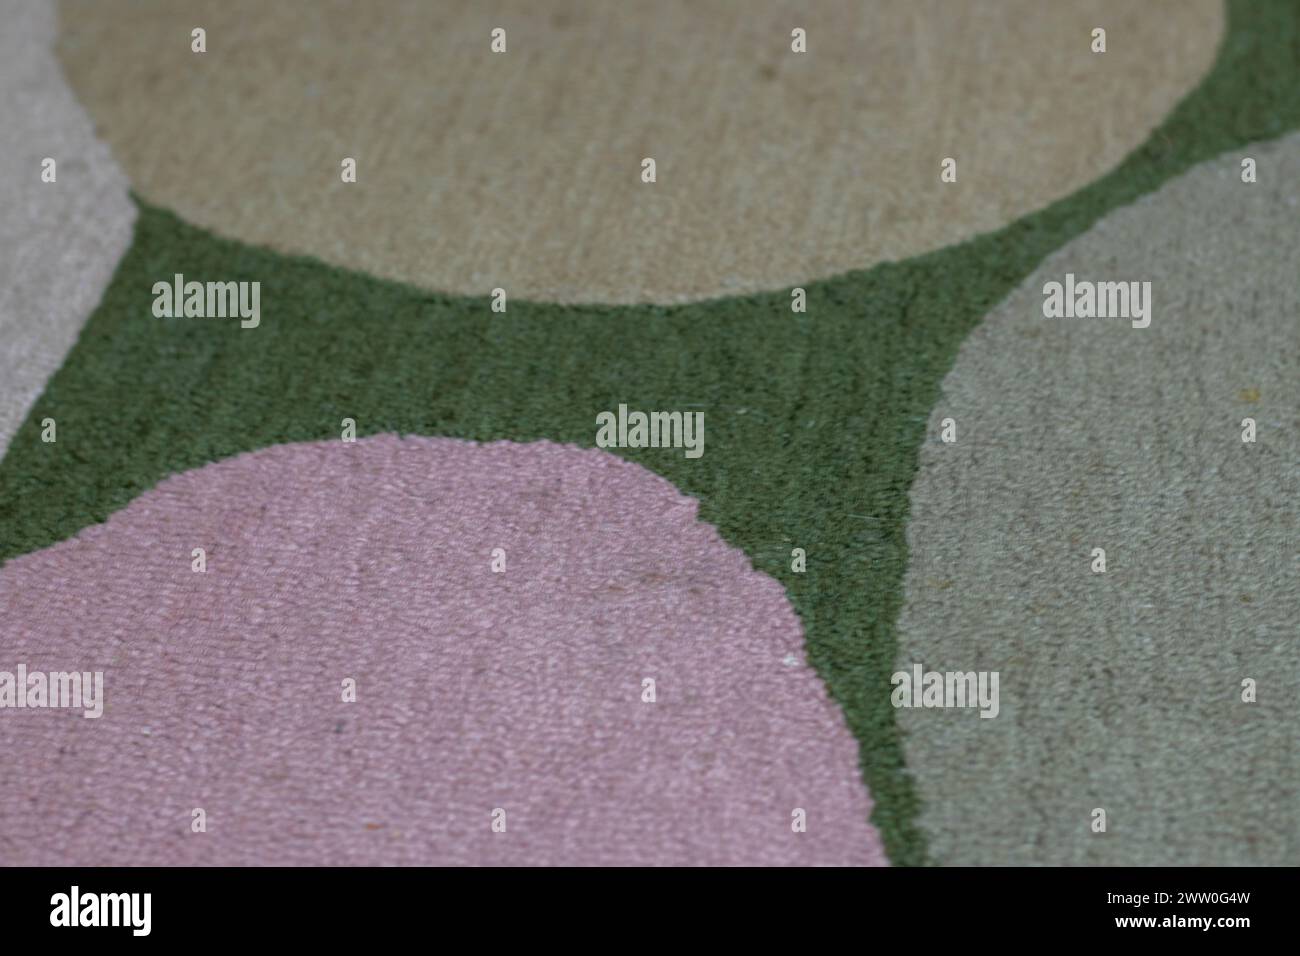 Soft color pattern design of carpet Stock Photo